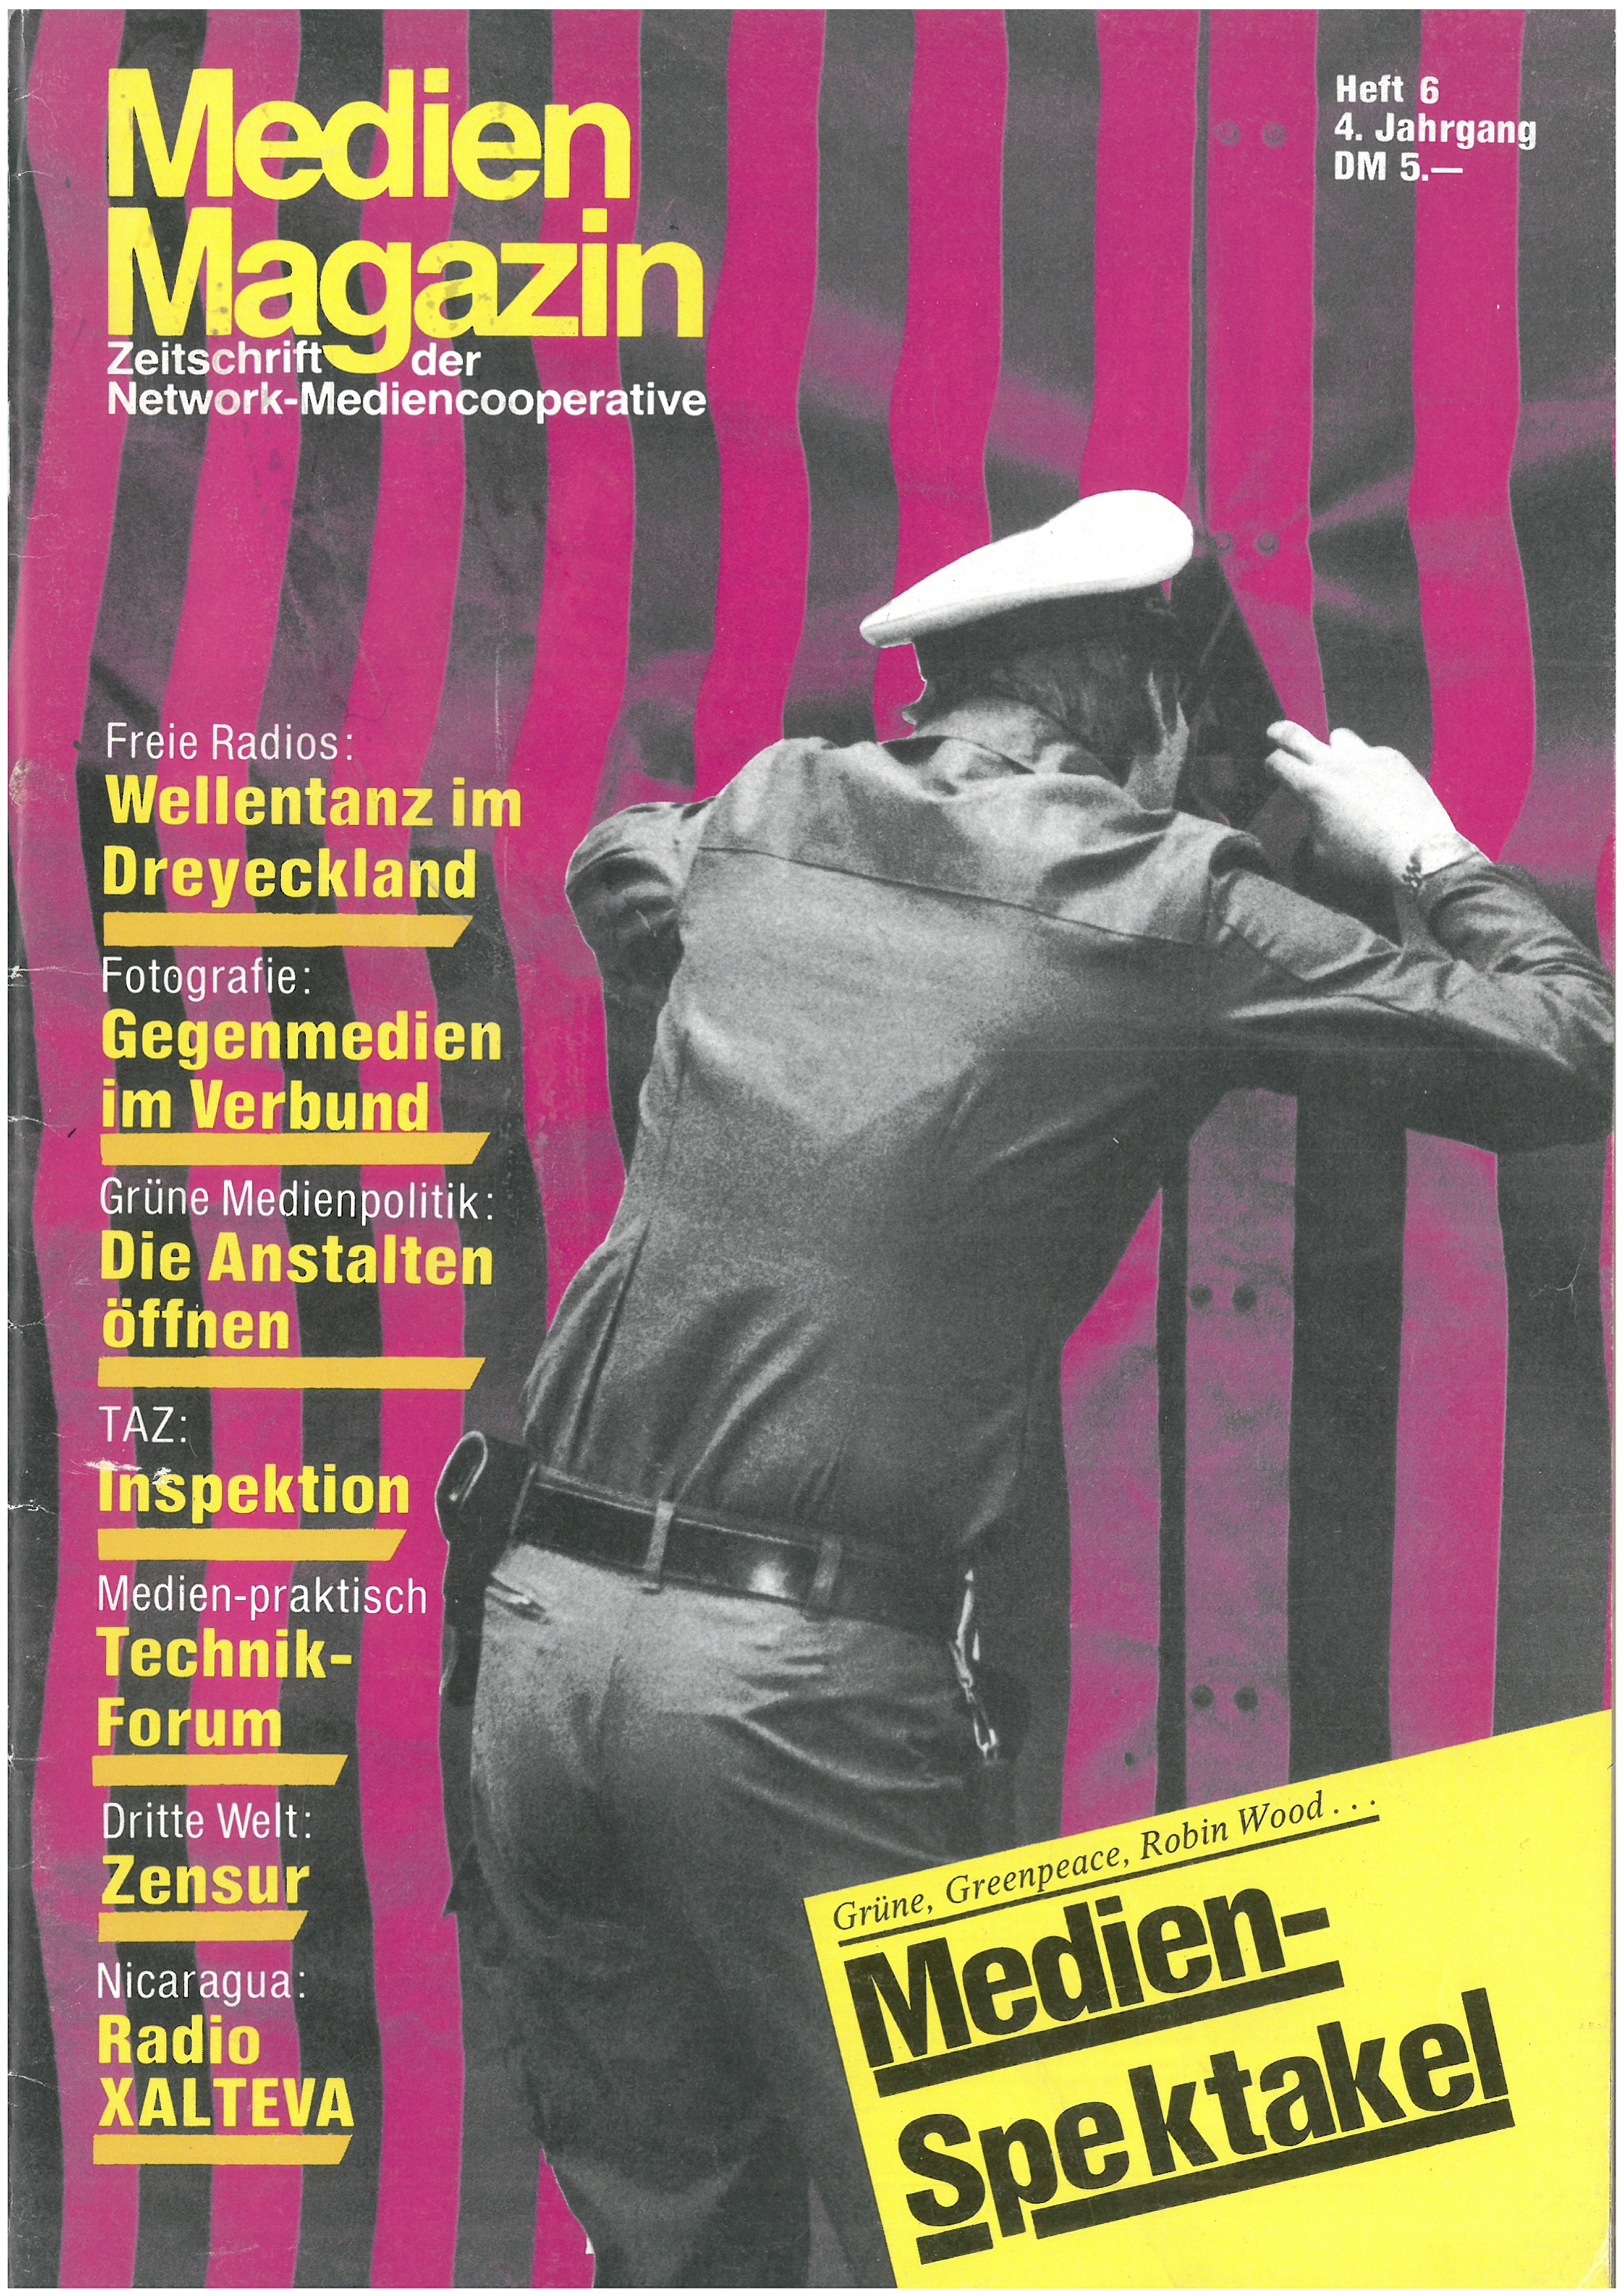 Medien Magazin. Zeitschrift der Network-Mediencooperative, Bild: Heft 6, 4. Jg. 1984.